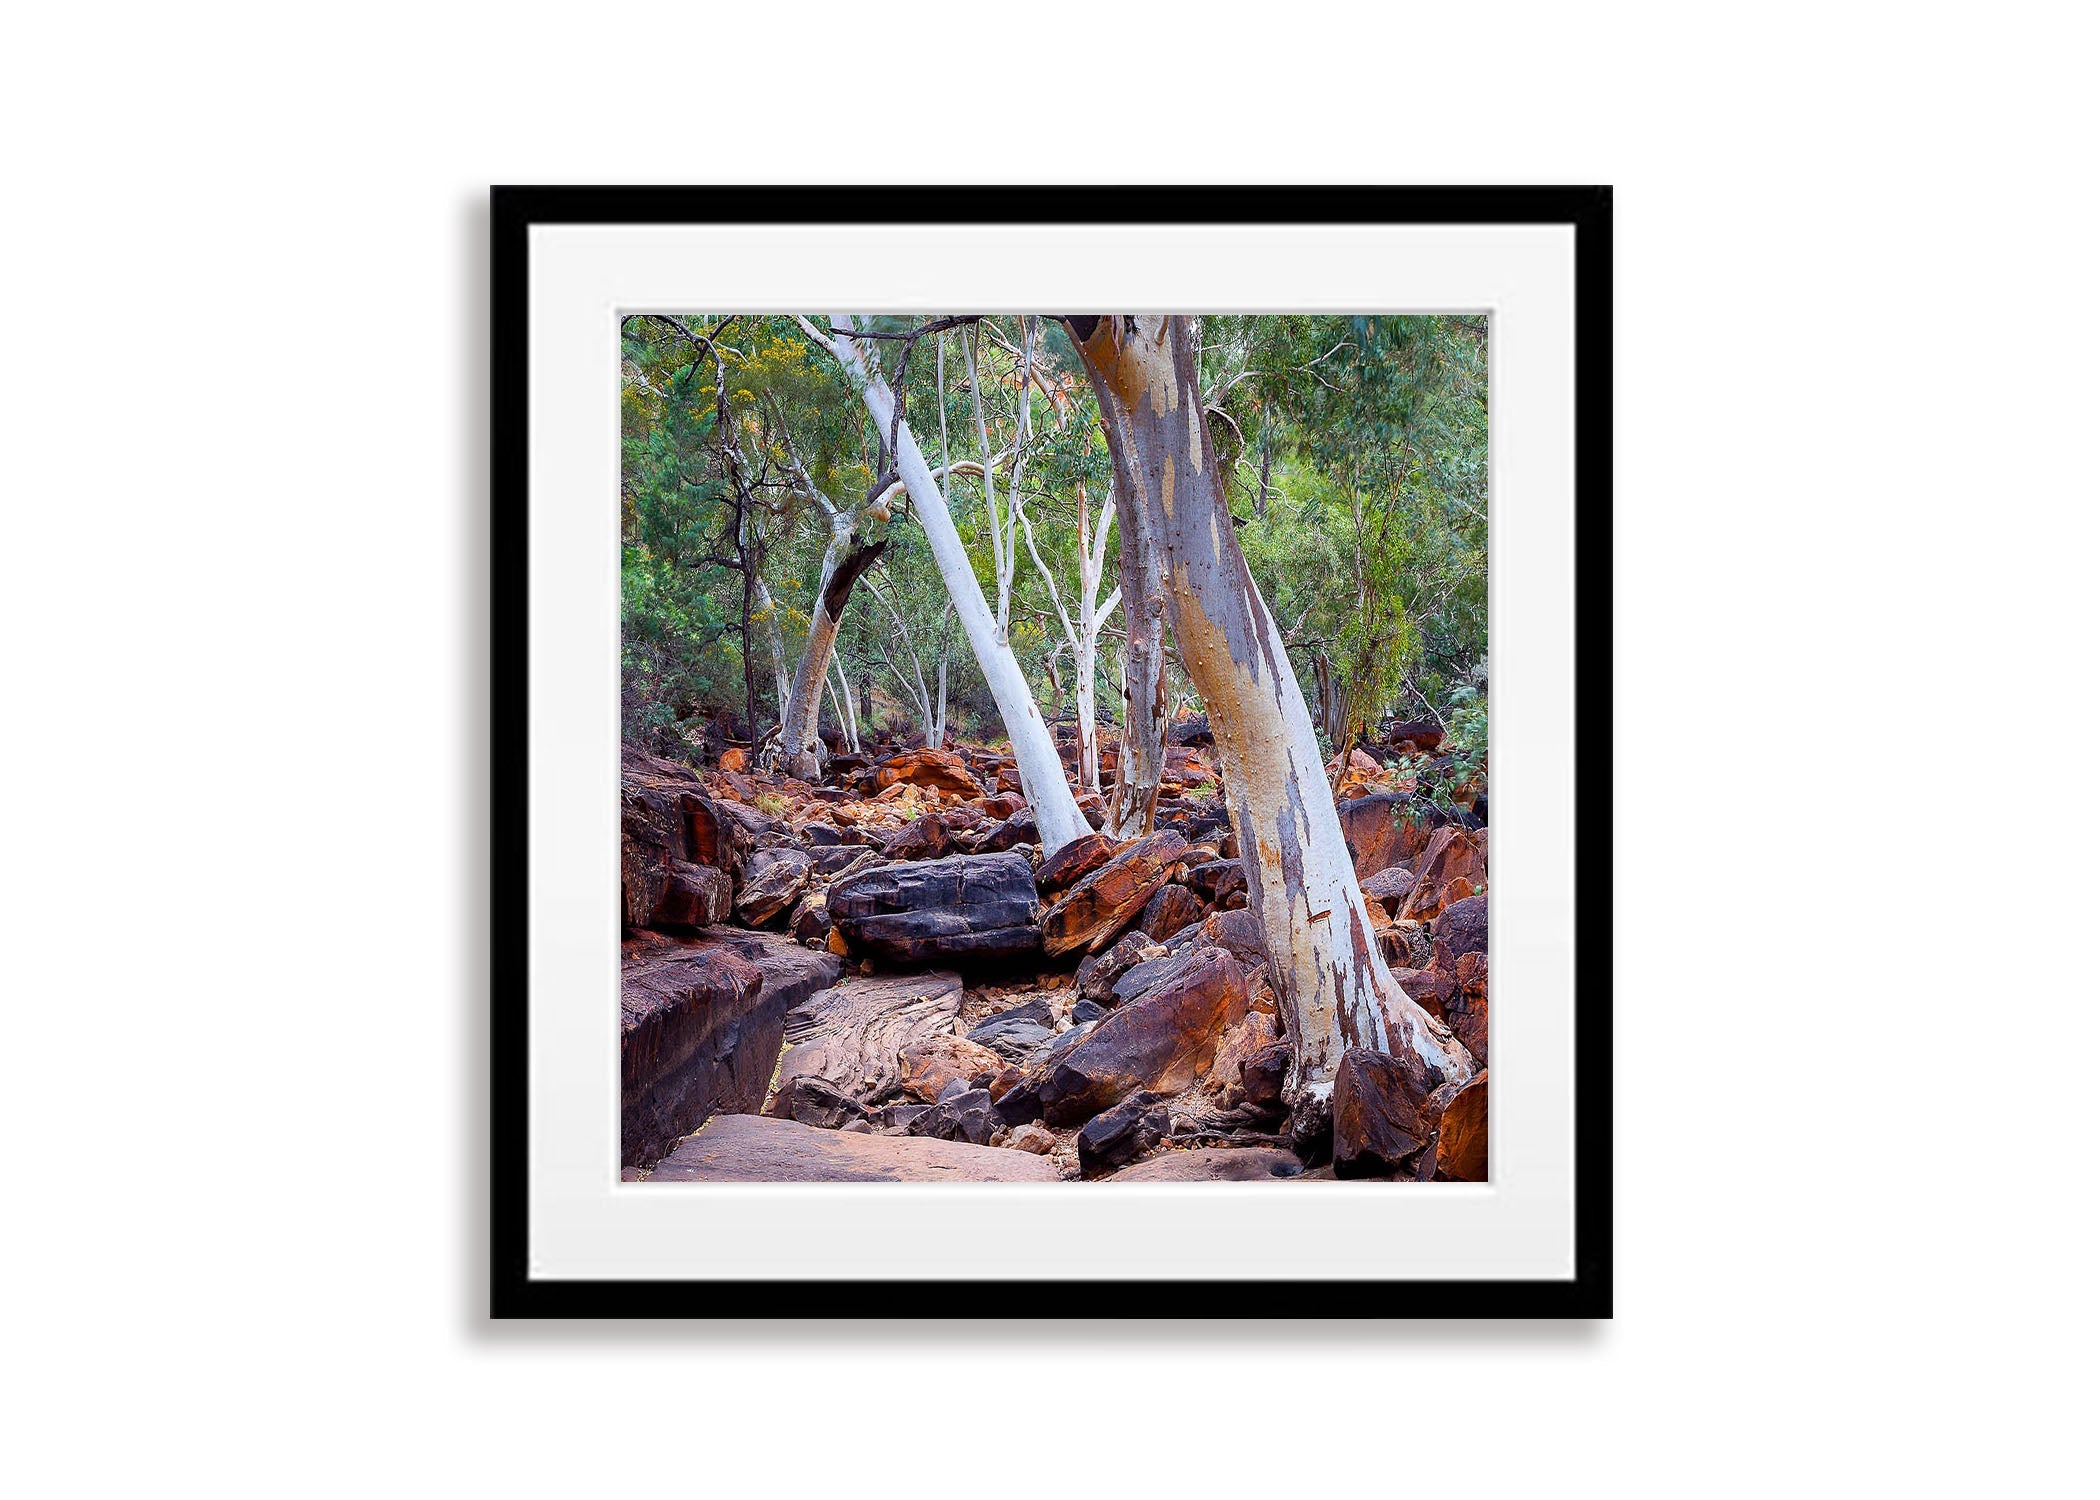 Kings Canyon Gums, Watarrka National Park - Northern Territory